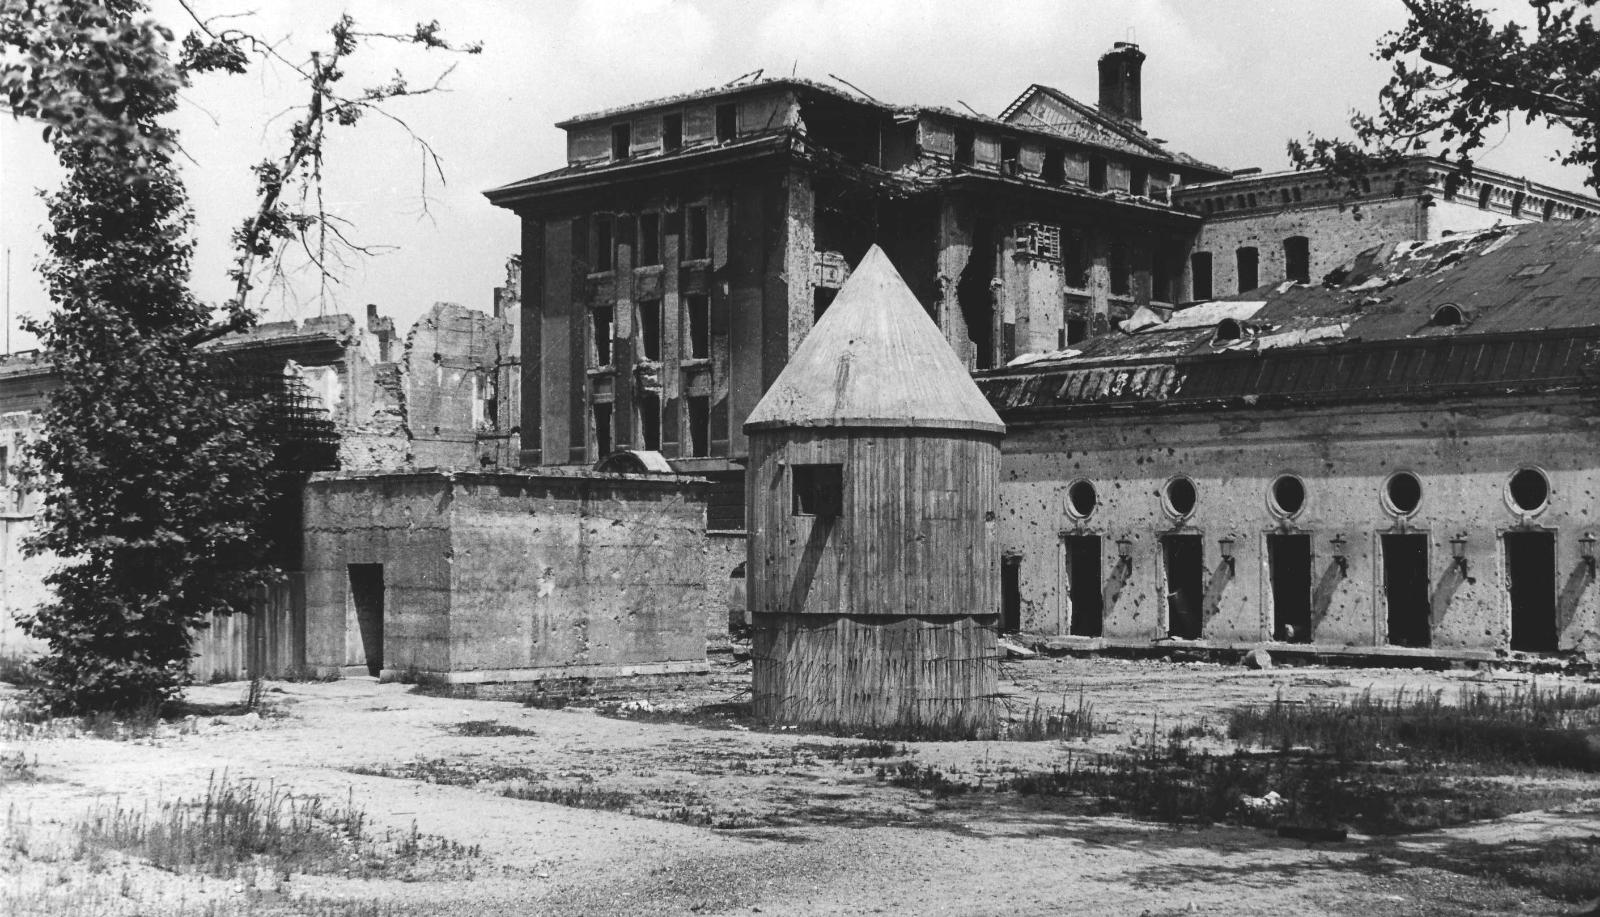 Hitler's bunker in Berlin